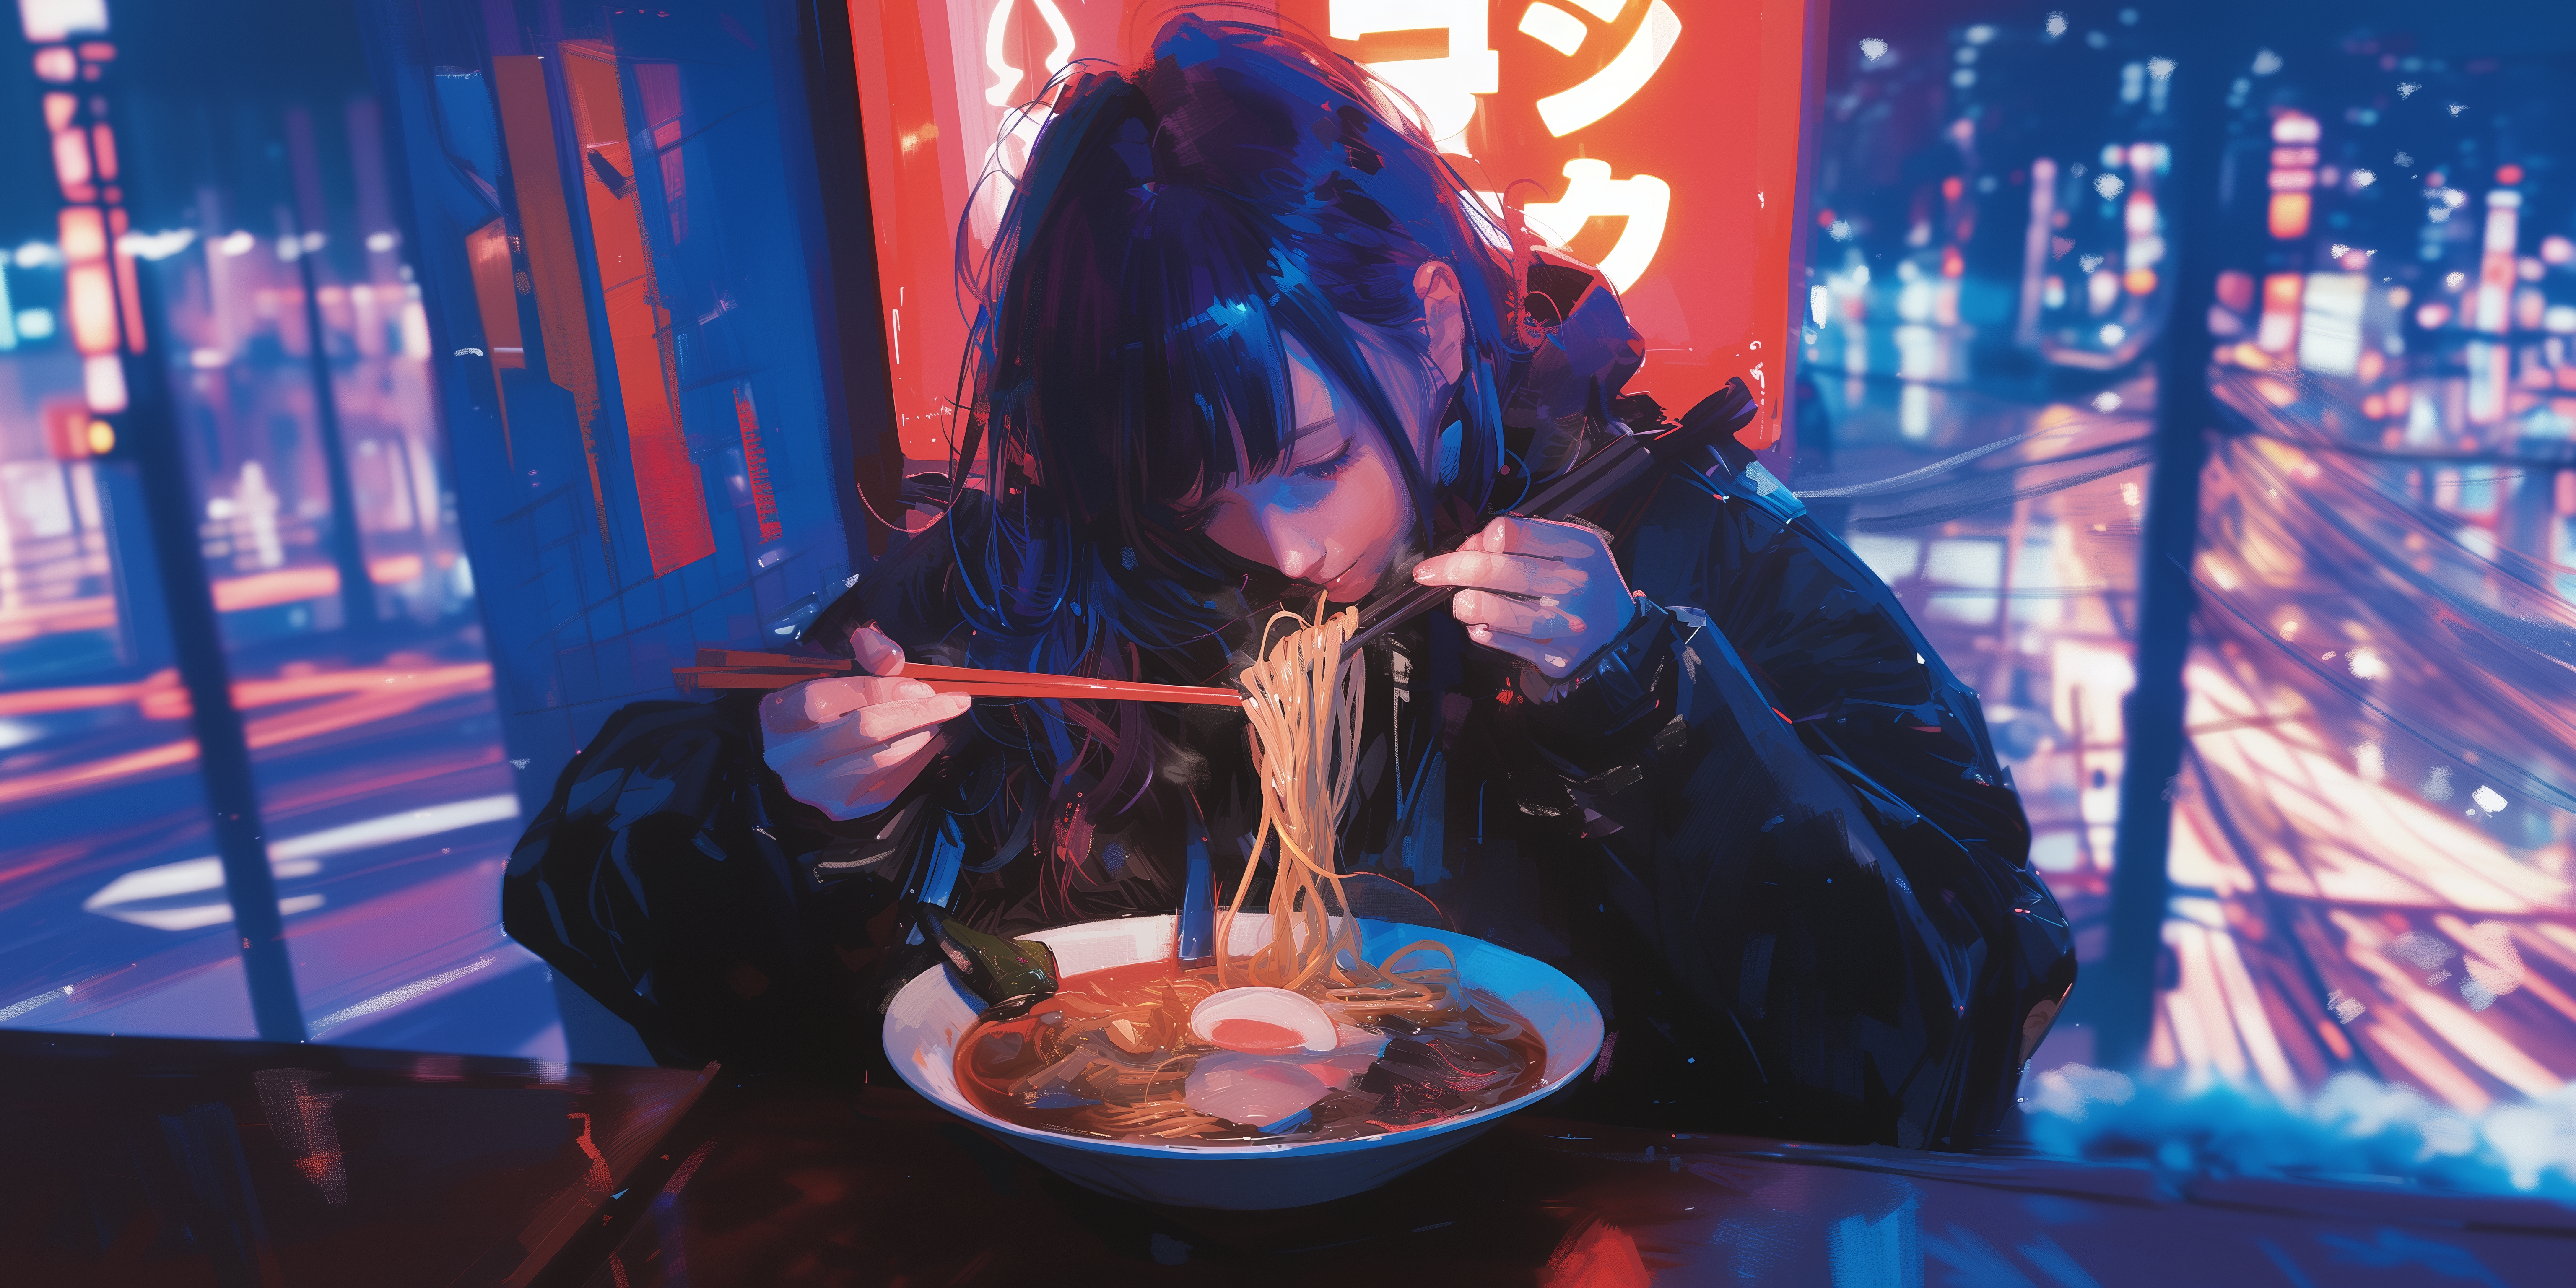 Anime 6144x3072 AI art illustration women eating noodles blue city painting chopsticks food bowls sitting long hair city lights long sleeves jacket ramen sign lights